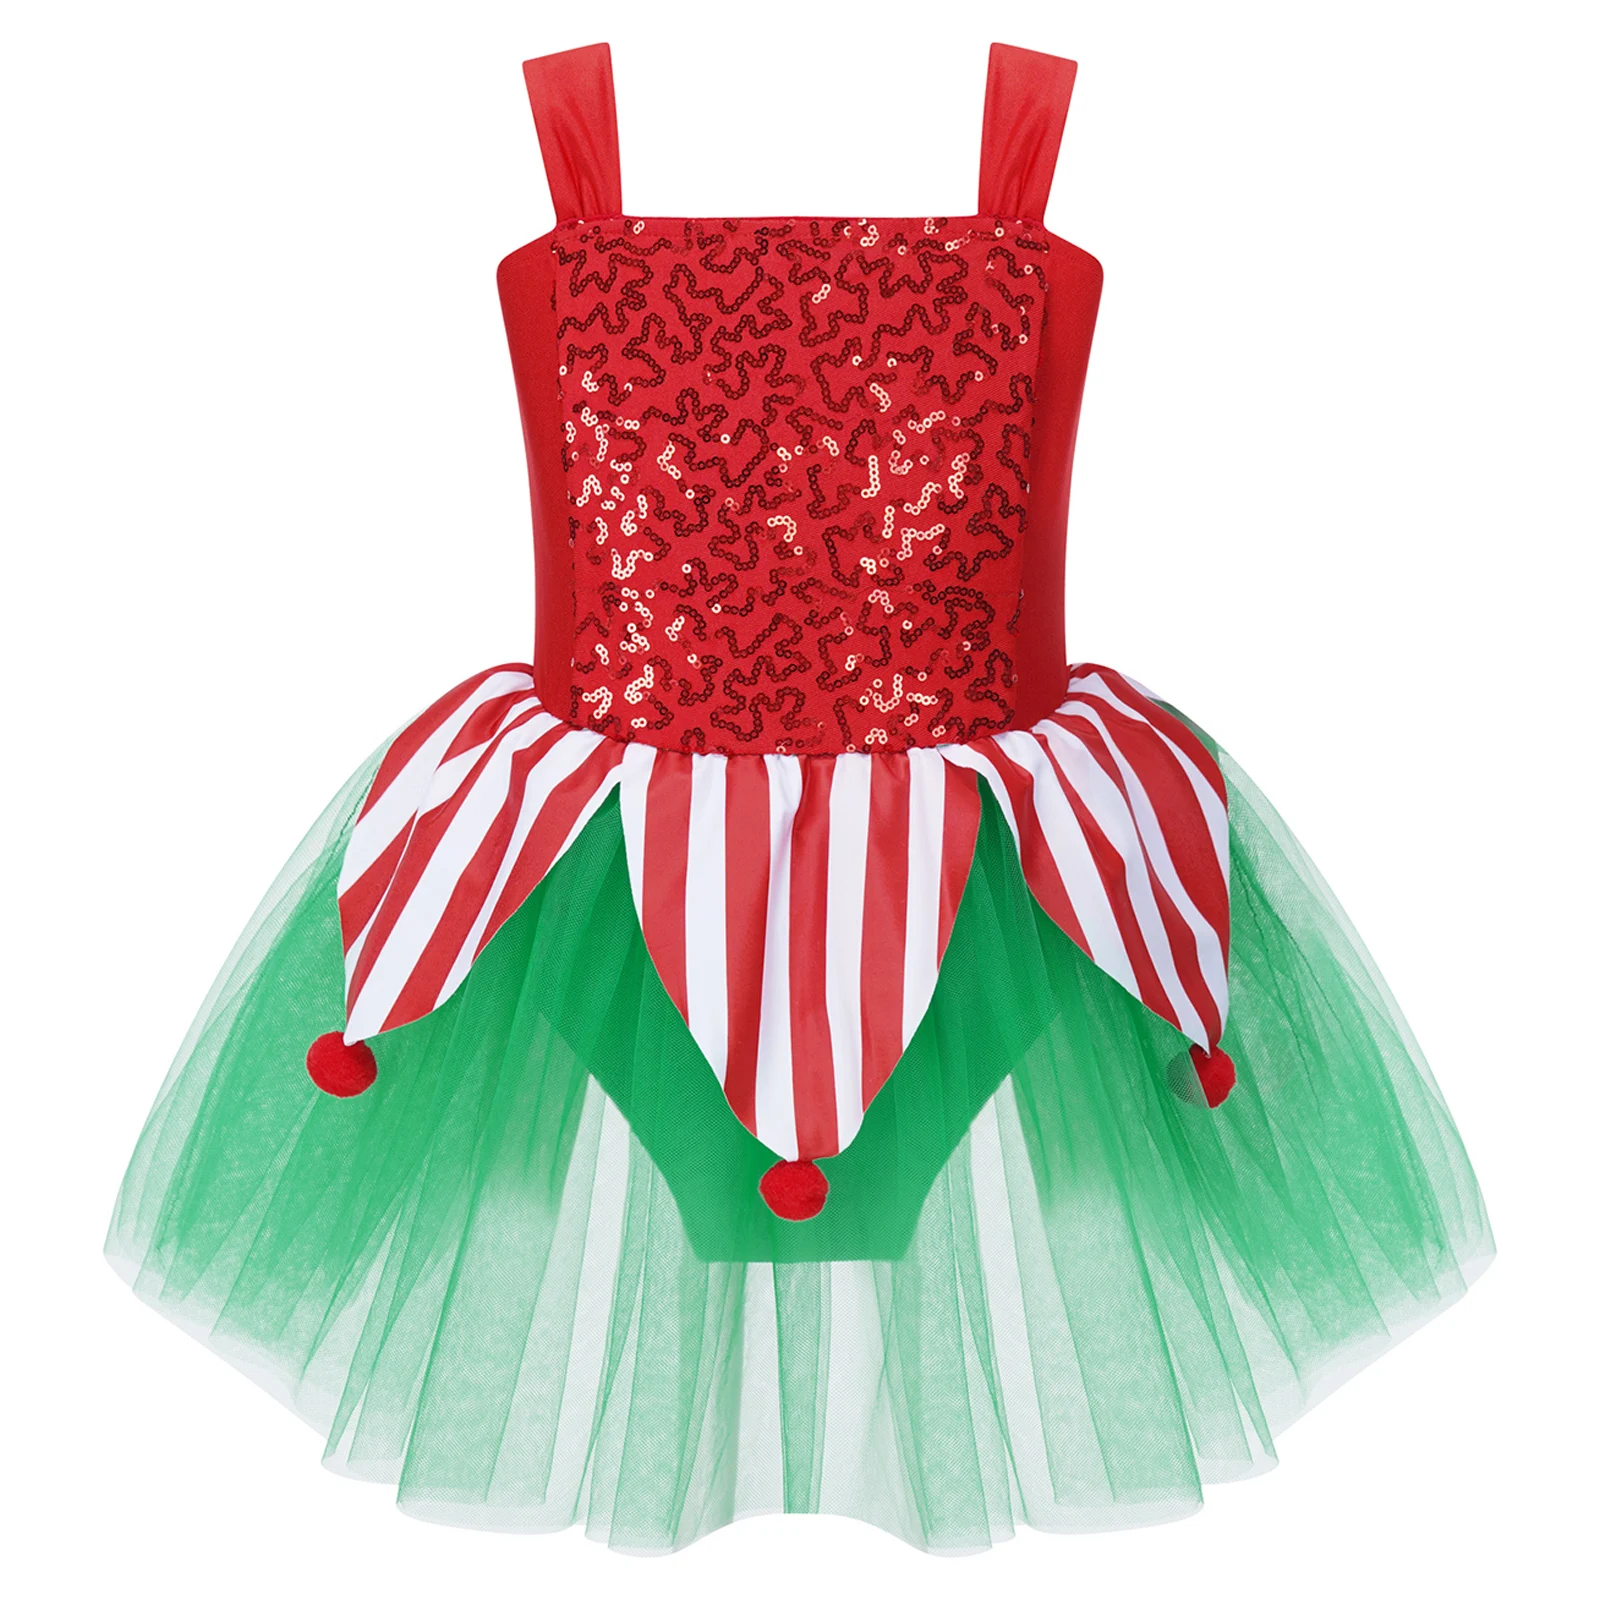 

Kids Girls Christmas Elf Costume Halloween Theme Party Cosplay Xmas Candy Cane Sequin Striped Skating Ballet Leotard Tutu Dress